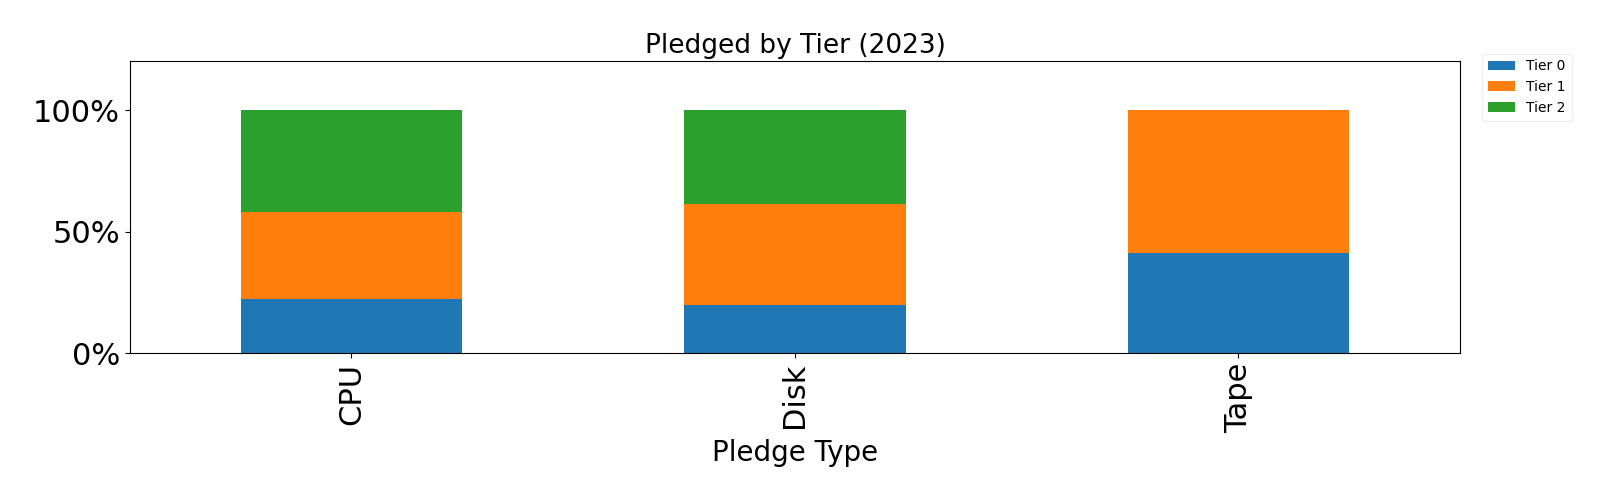 Pledge by Tier